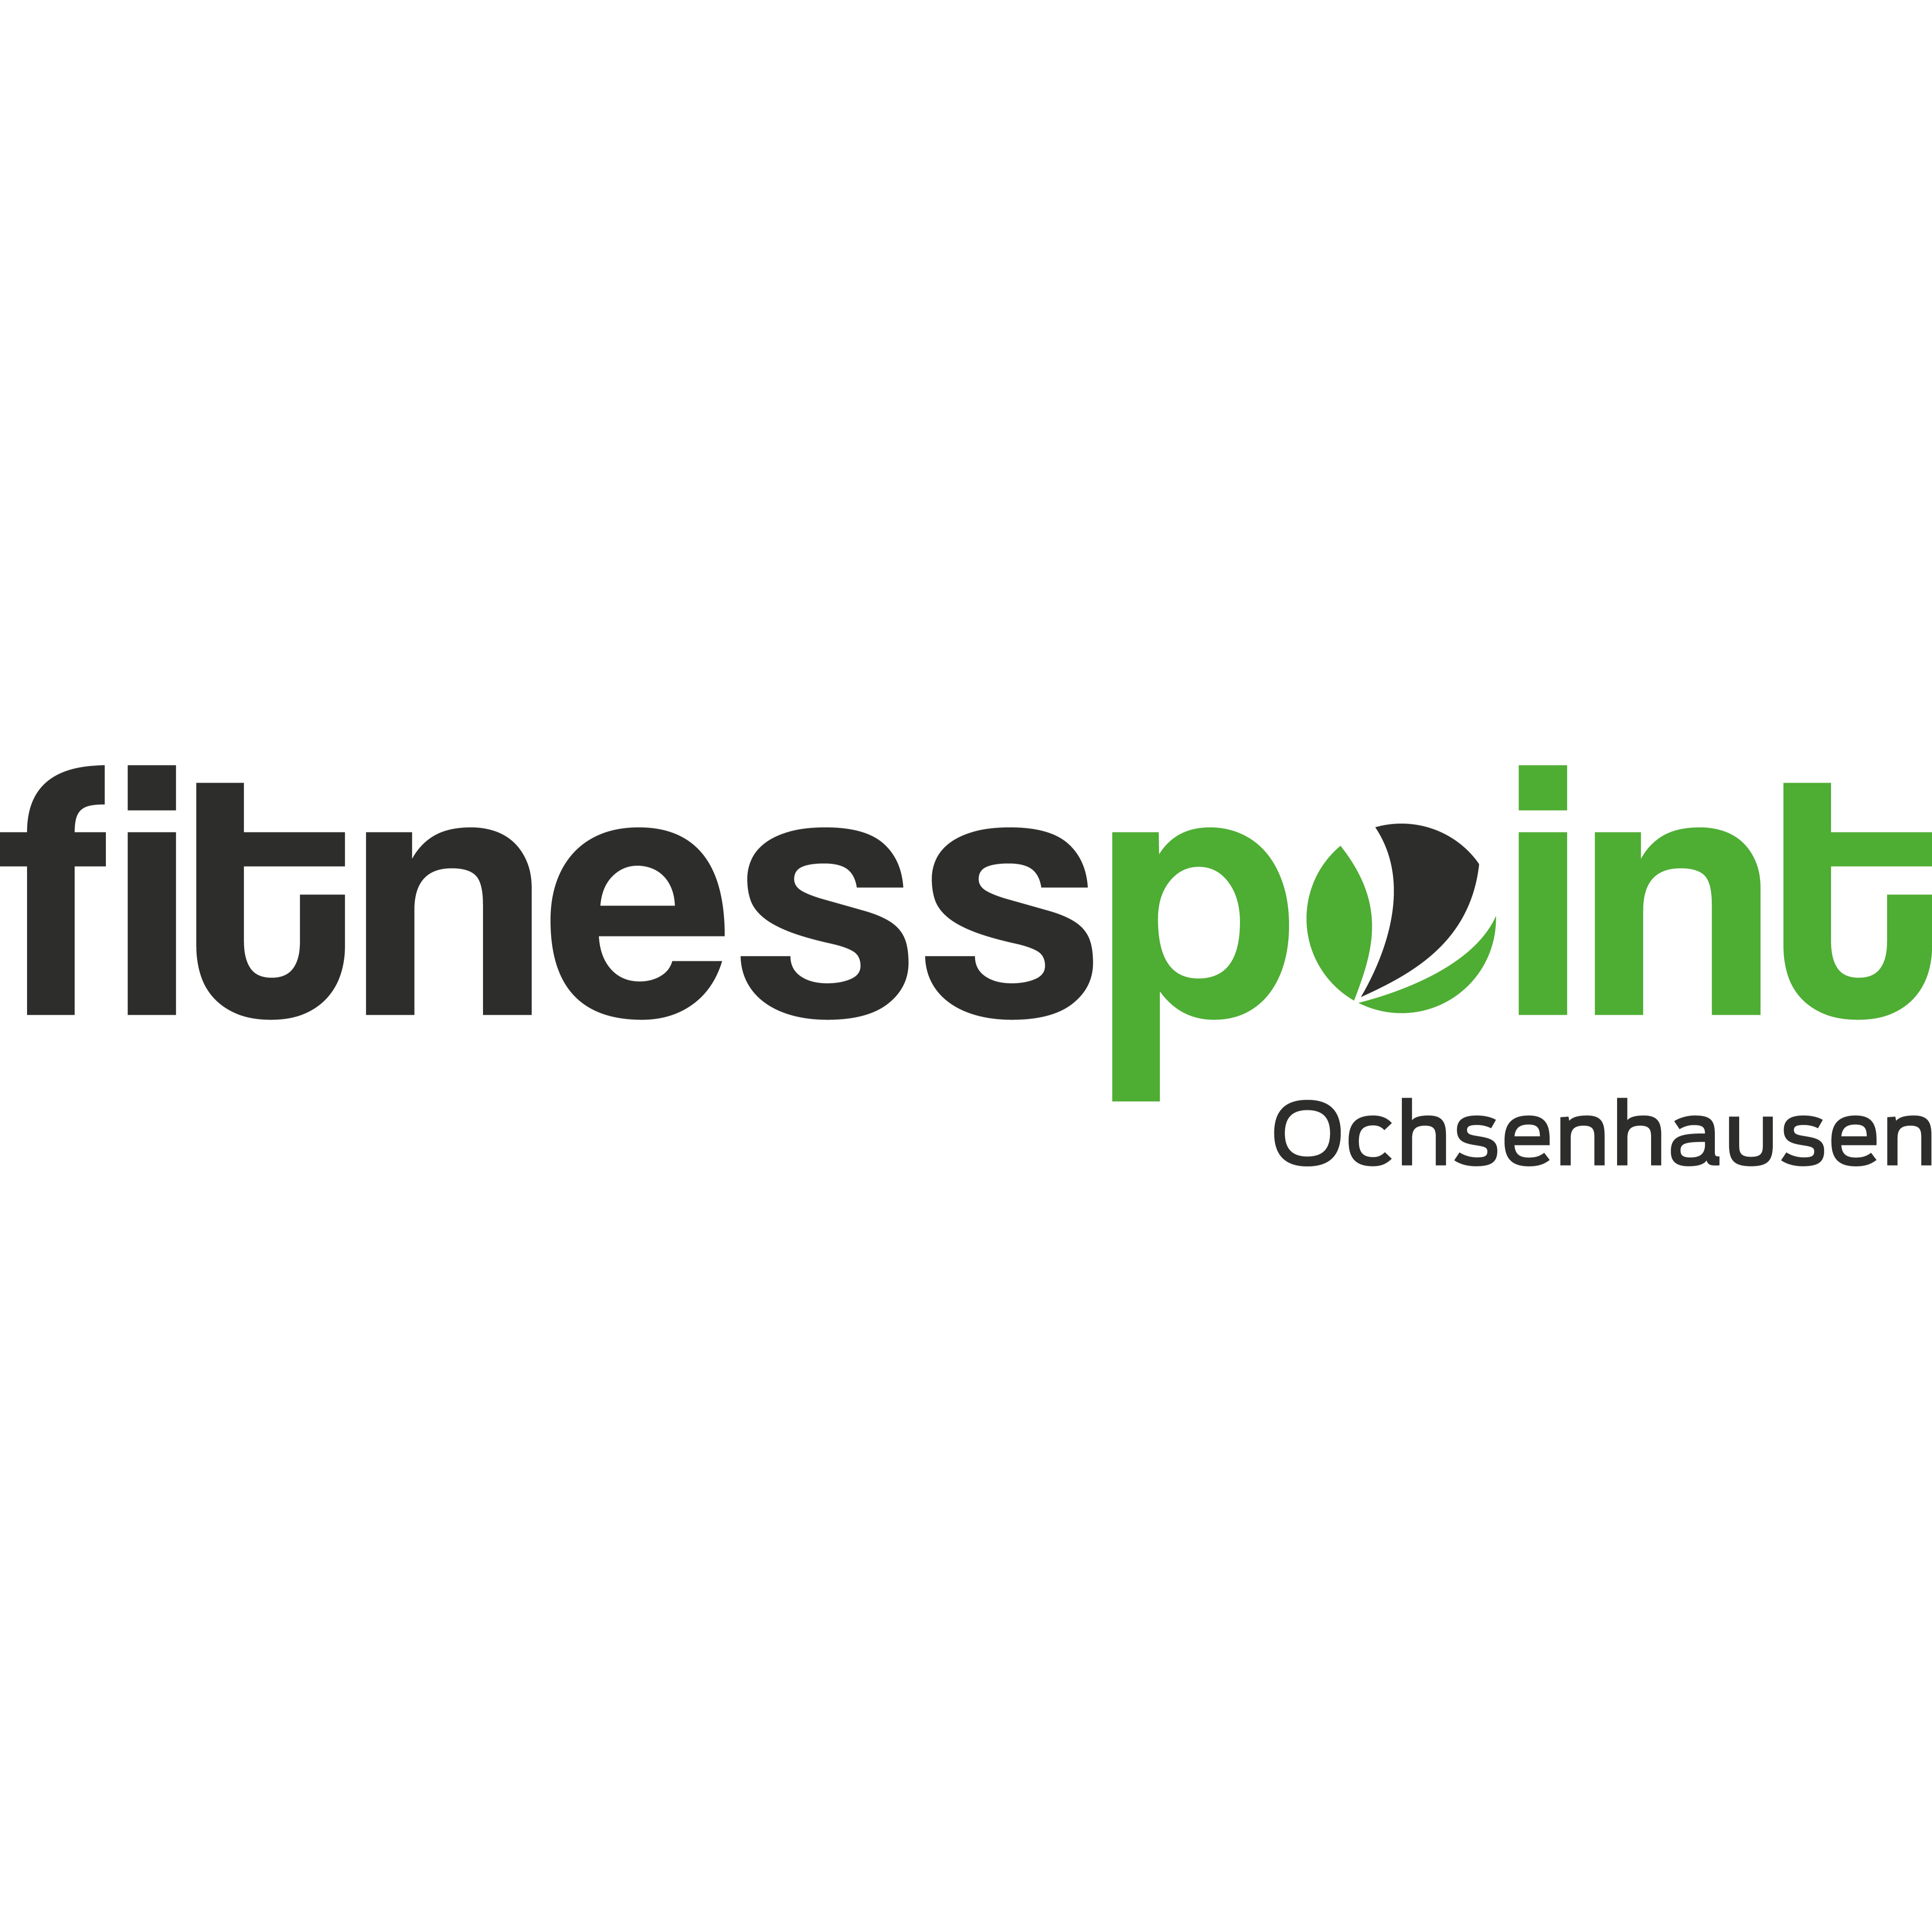 Fitnesspoint Ochsenhausen  